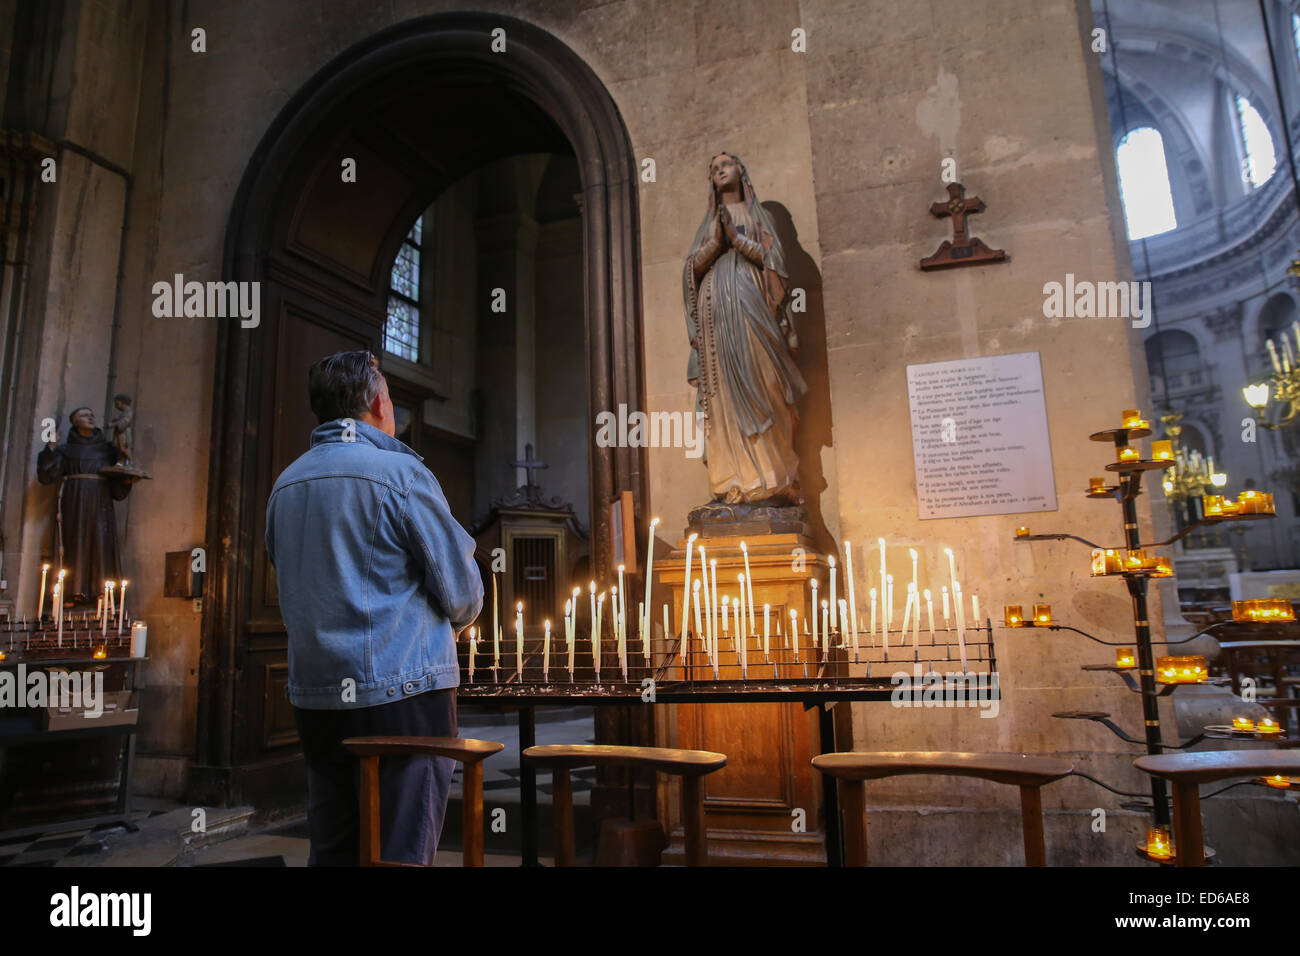 Hombre rezar dentro de la iglesia Foto de stock